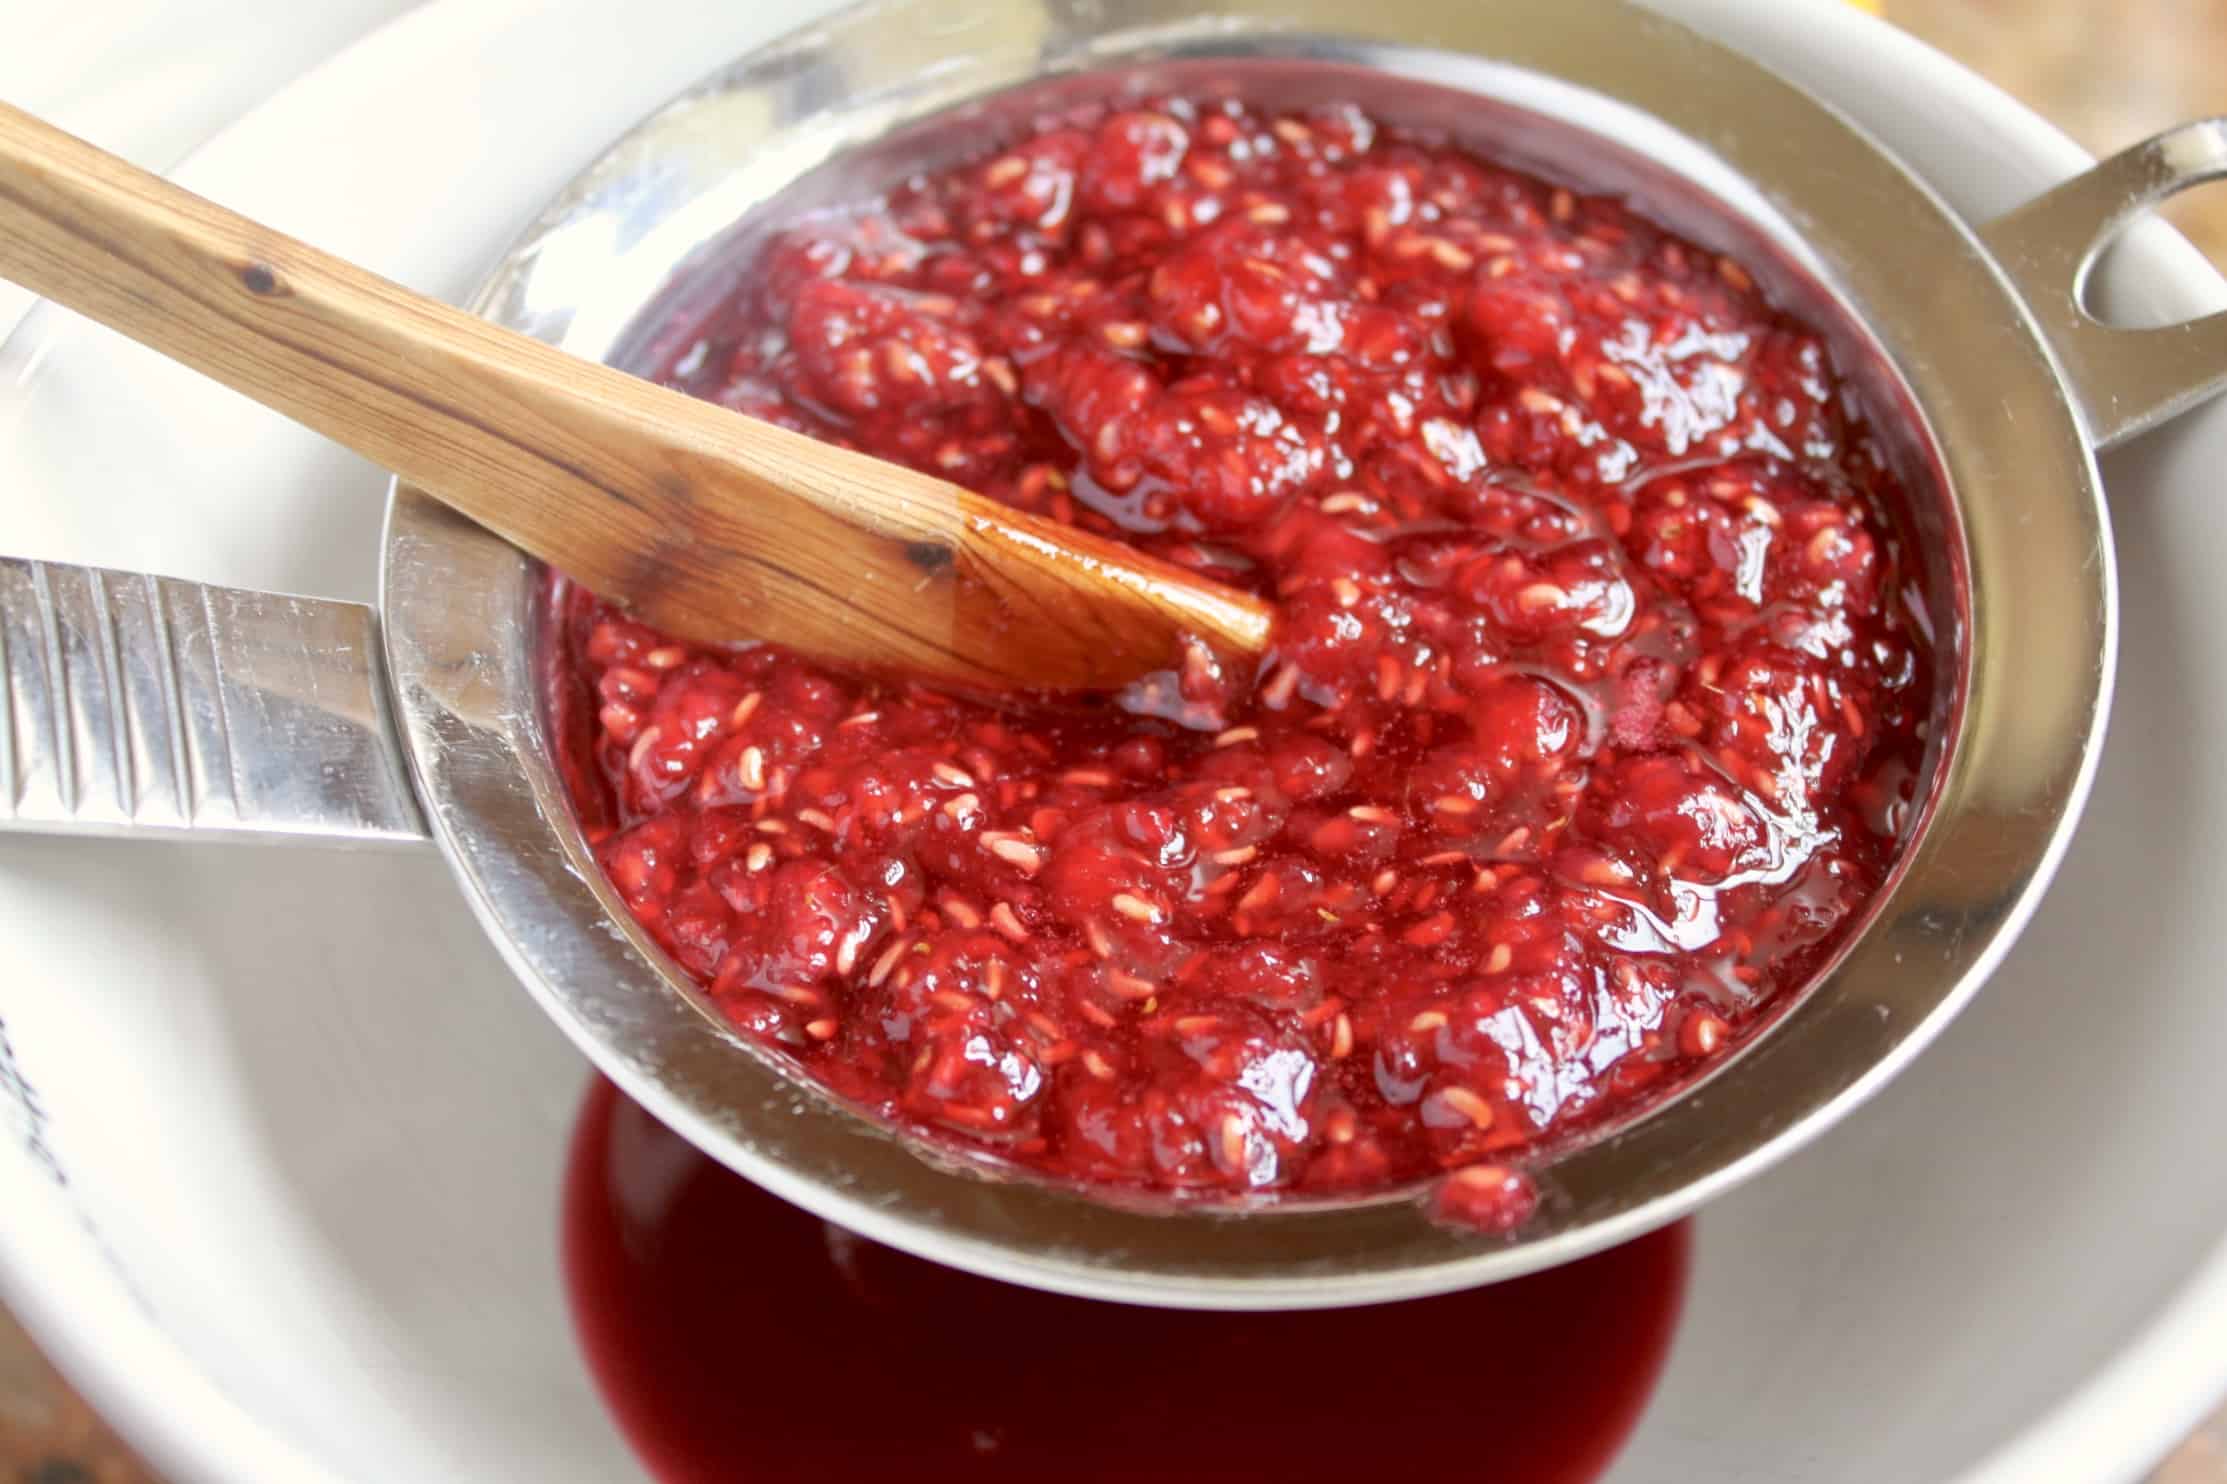 straining rasberries to make syrup